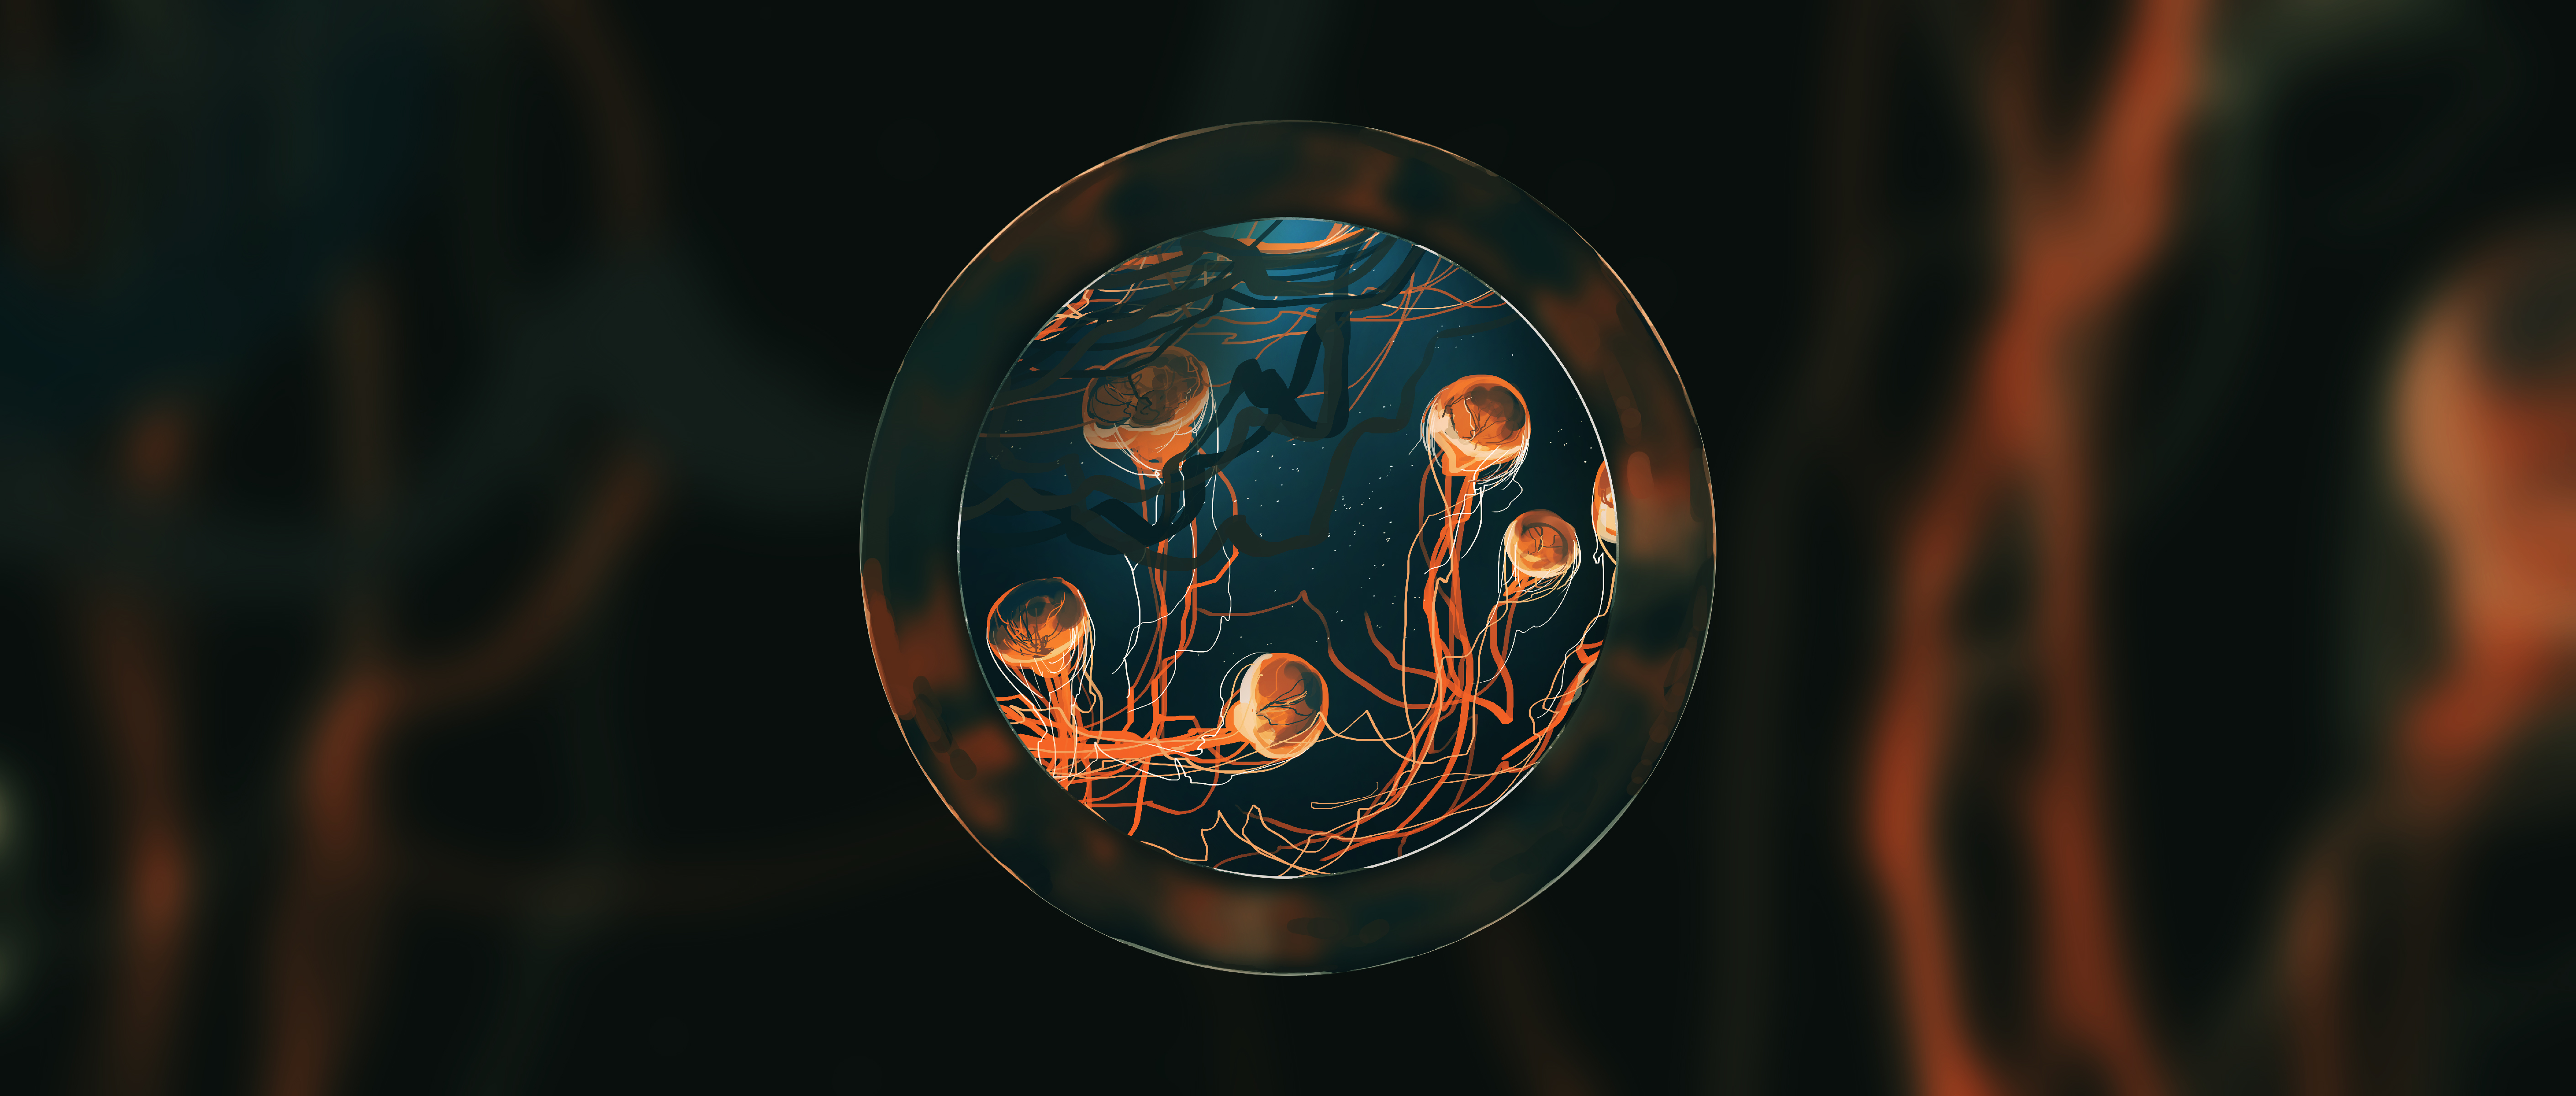 Gracile Digital Art Artwork Illustration Jellyfish Minimalism Abstract Wide Screen Ultrawide Circle 5640x2400